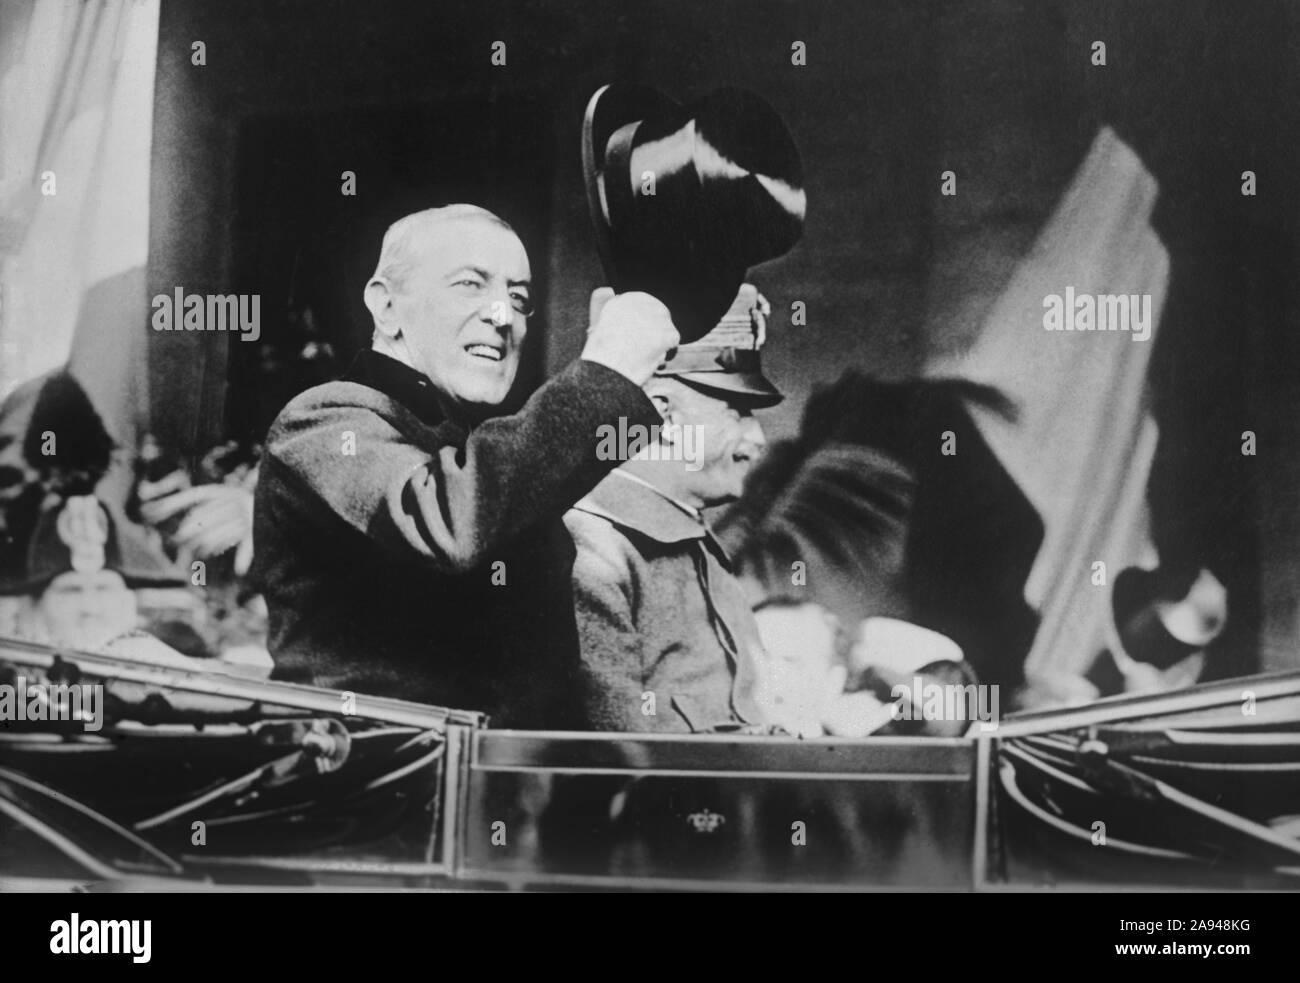 Us-Präsident Woodrow Wilson (1856-1924) mit König Victor Emmanuel III. (1869-1947) von Italien, Enroute, Quirinal, Rom, Italien, Bain News Service, 4. Januar 1919 Stockfoto